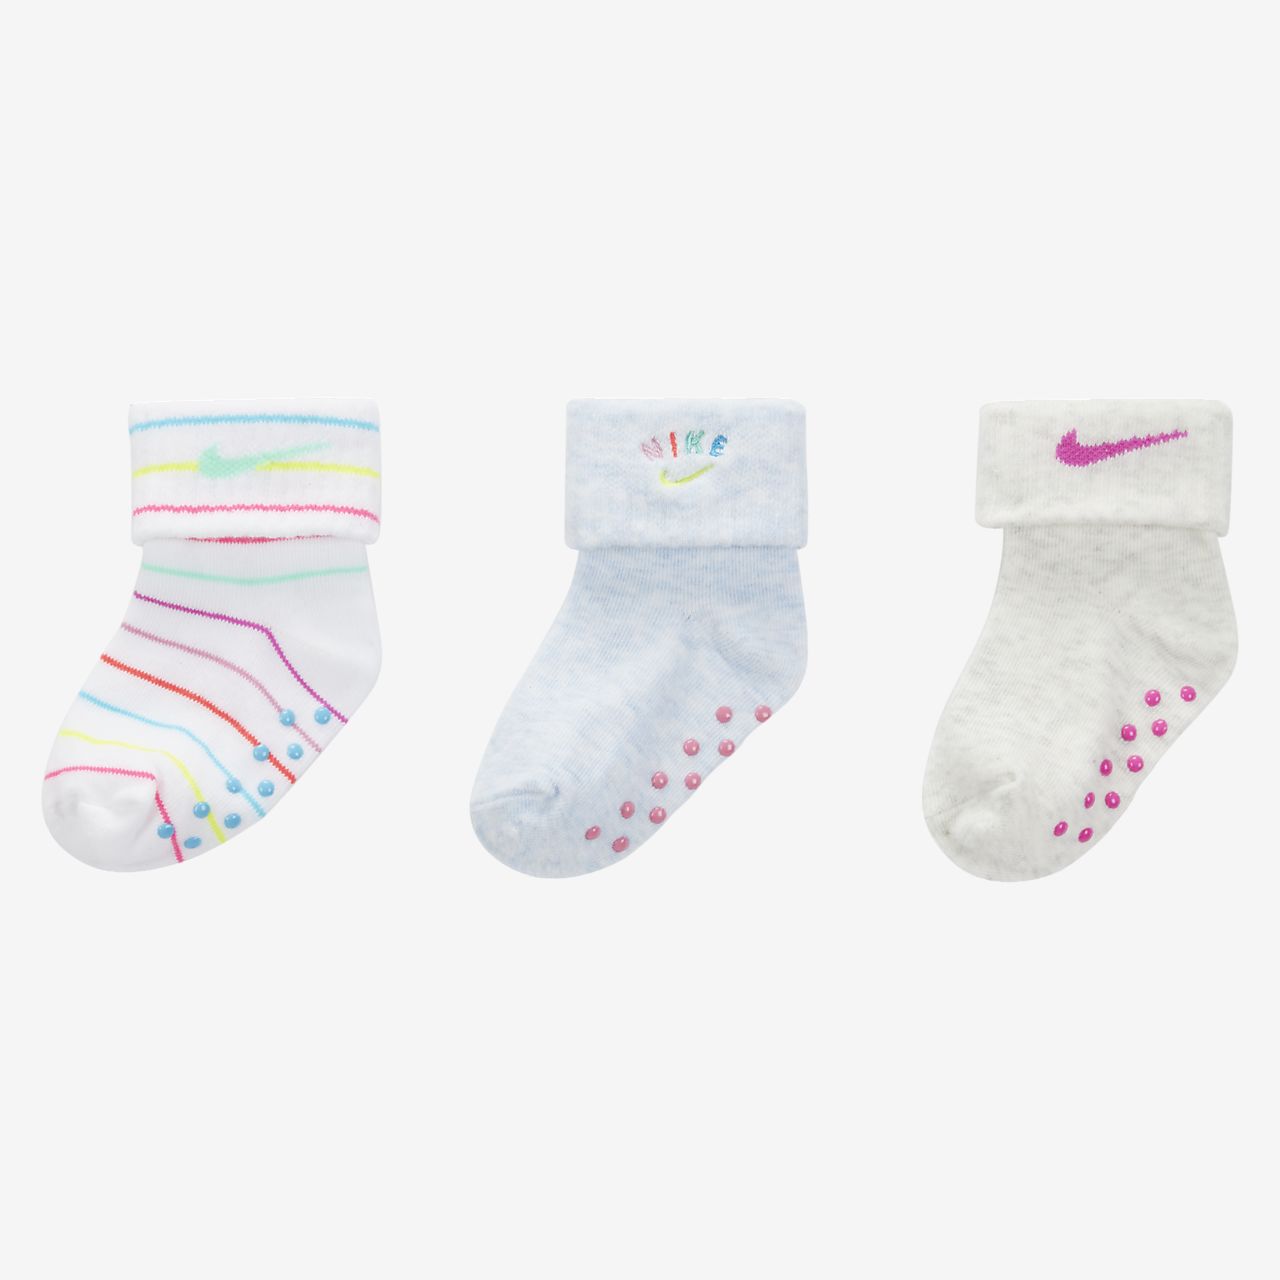 Nike Baby (12-24M) Gripper Ankle Socks 